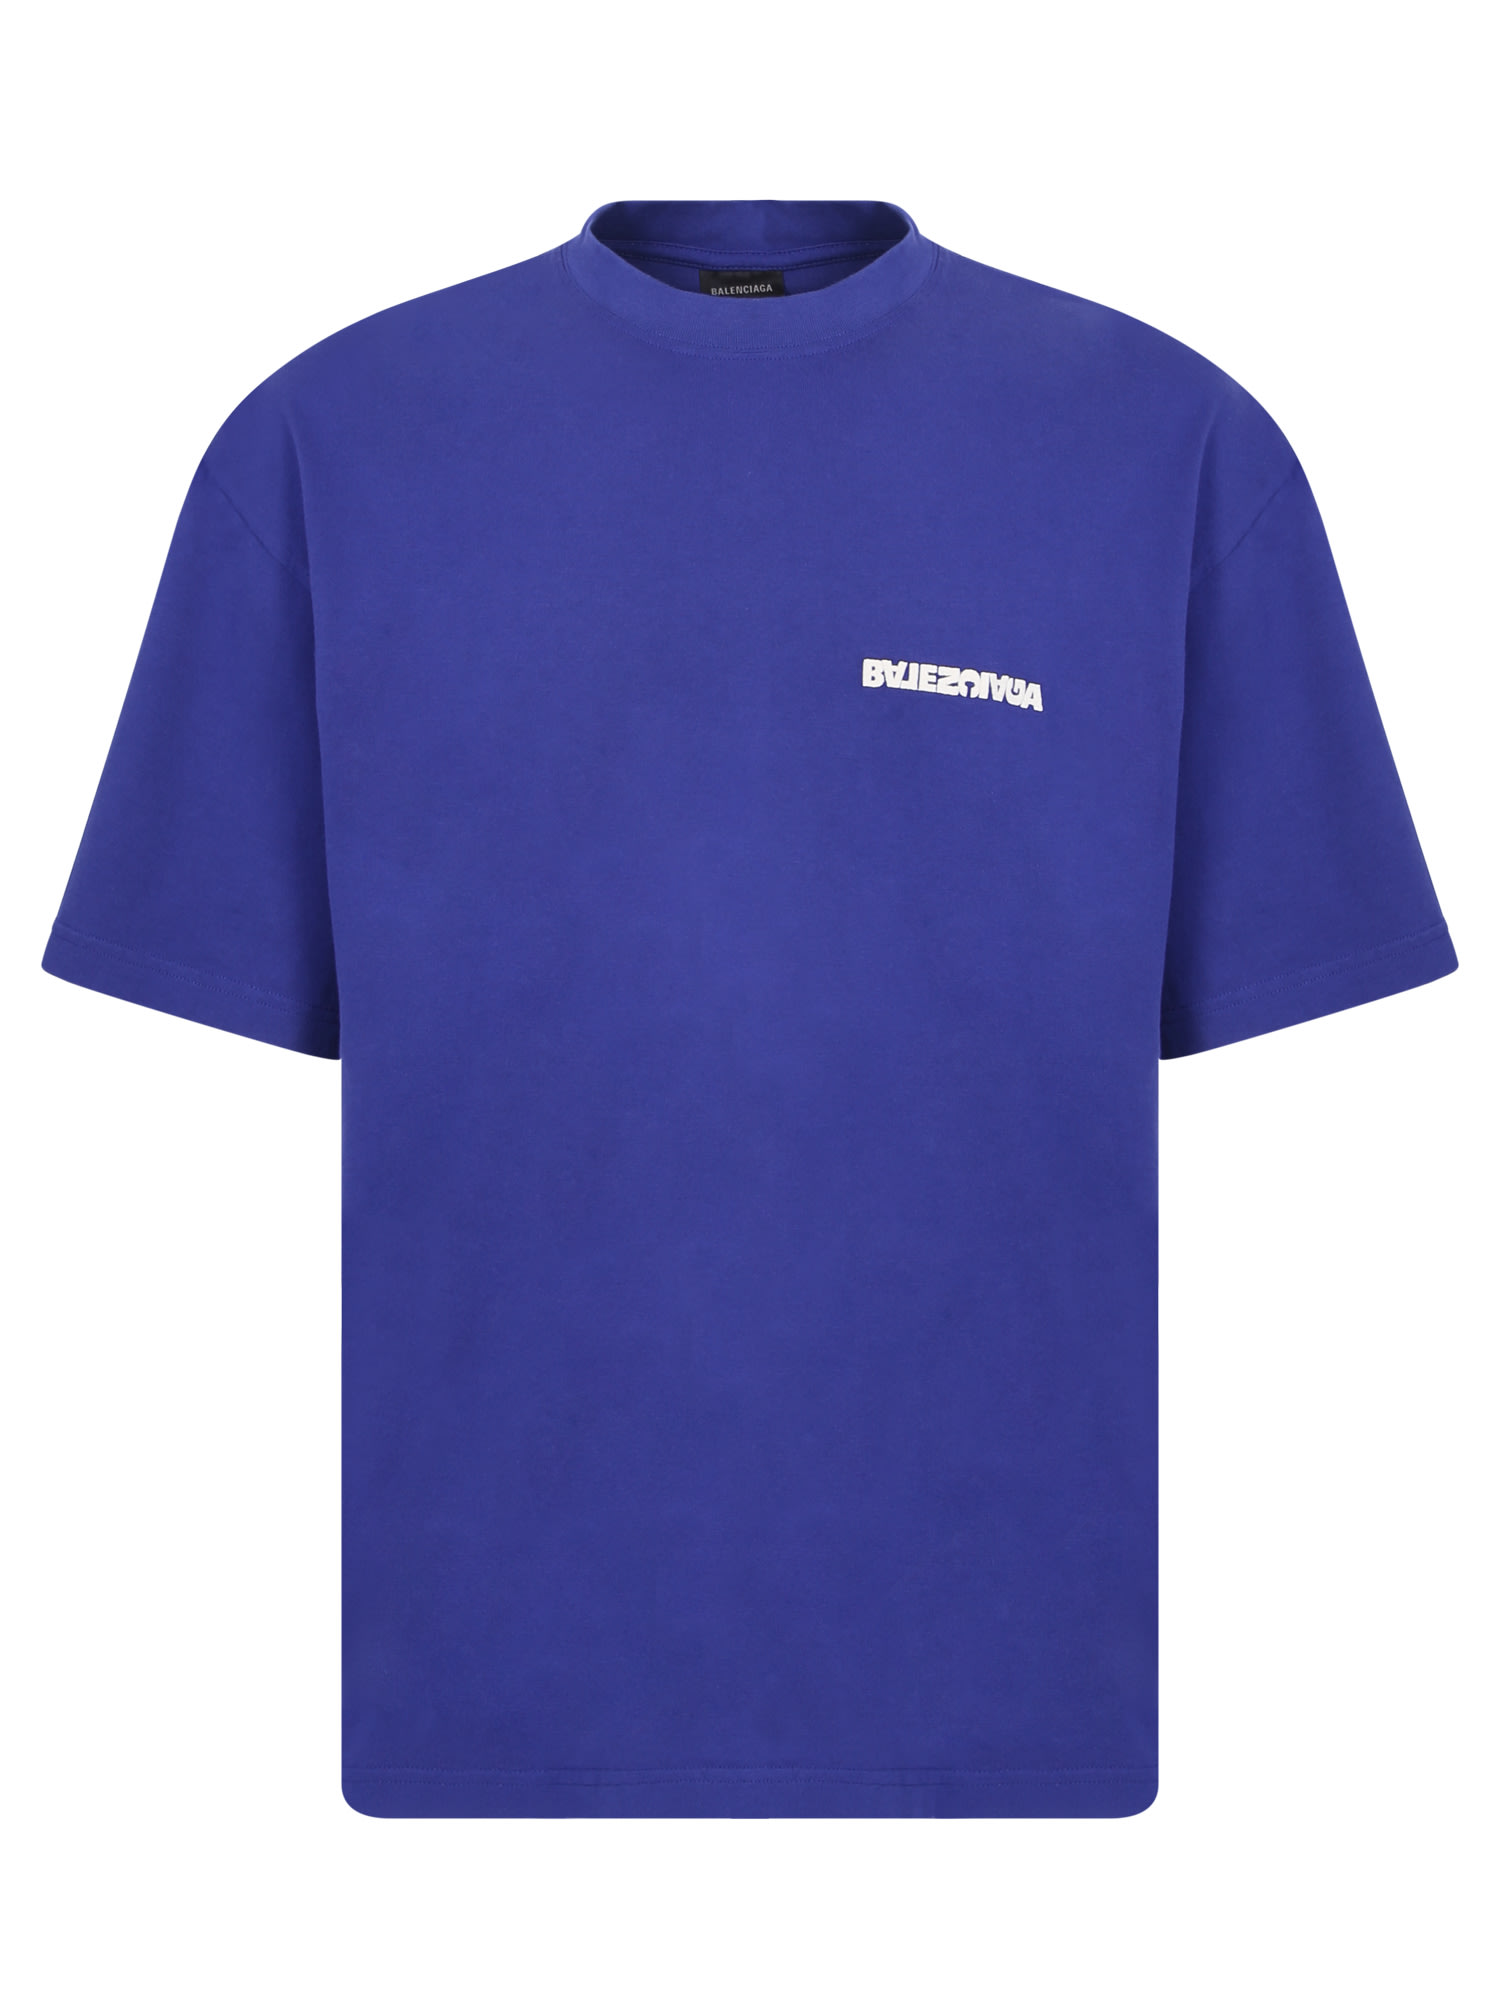 Balenciaga Blue Indigo Medium Fit T-shirt